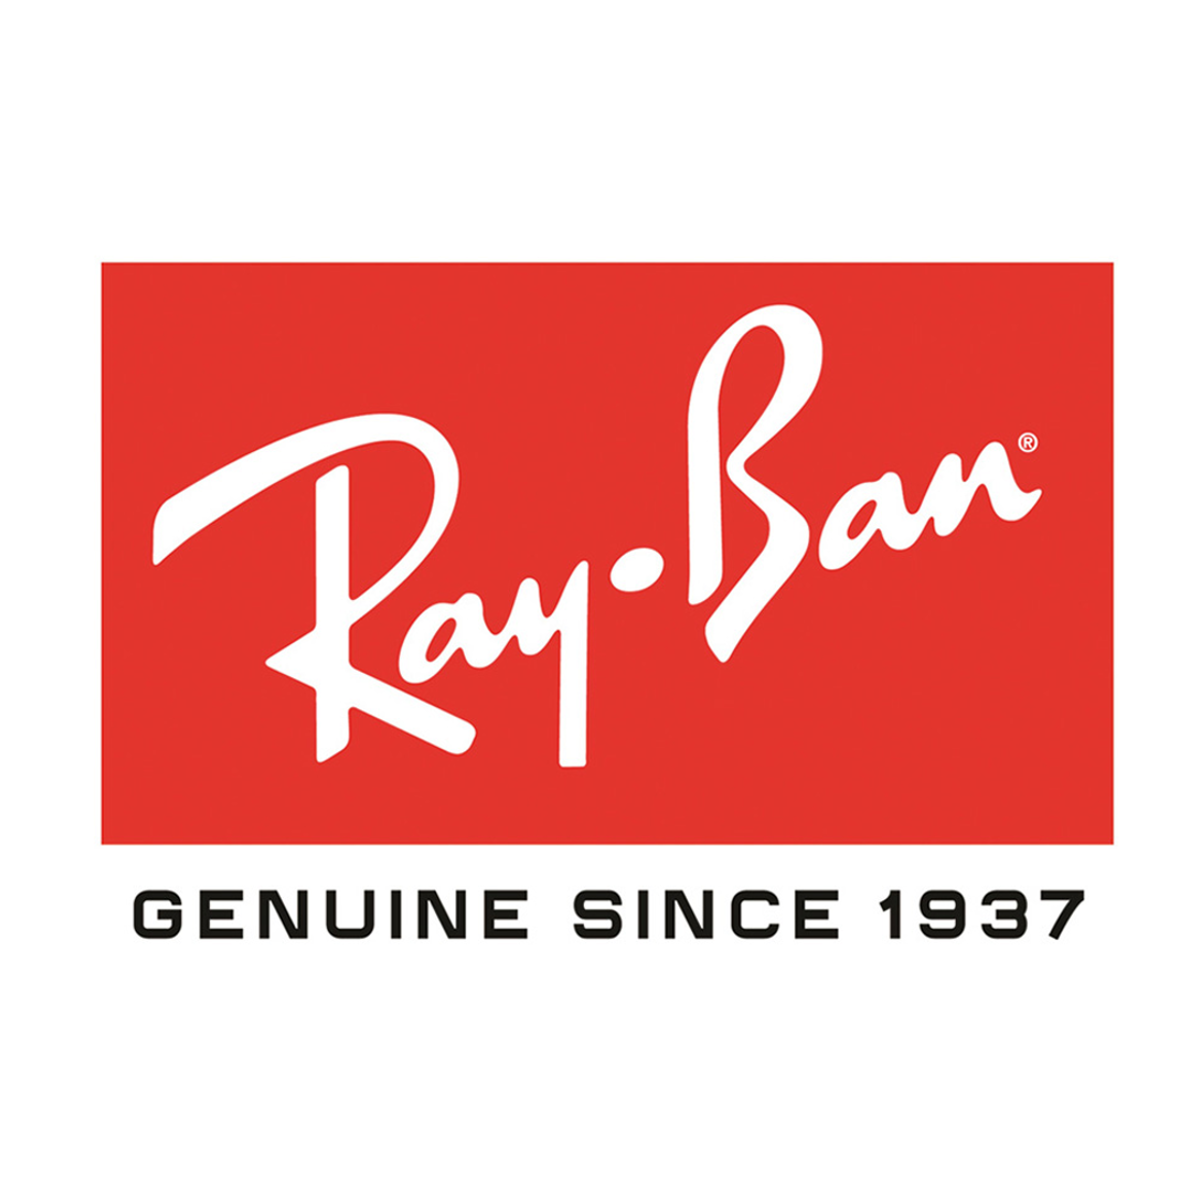 Ray-Ban® Sunglasses